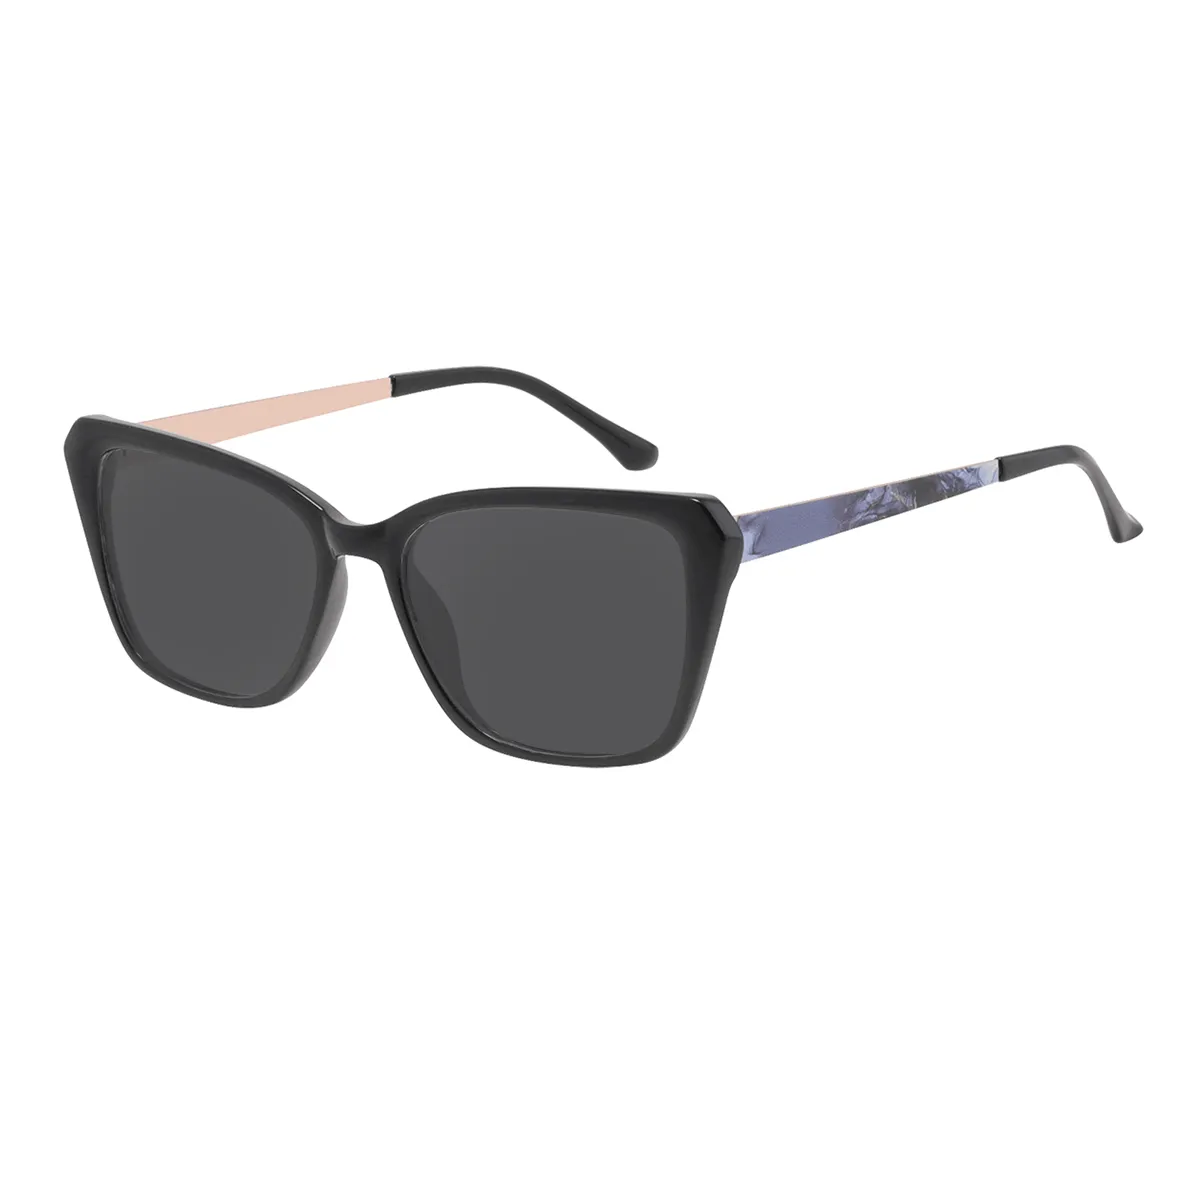 Davina - Square Black Sunglasses for Women